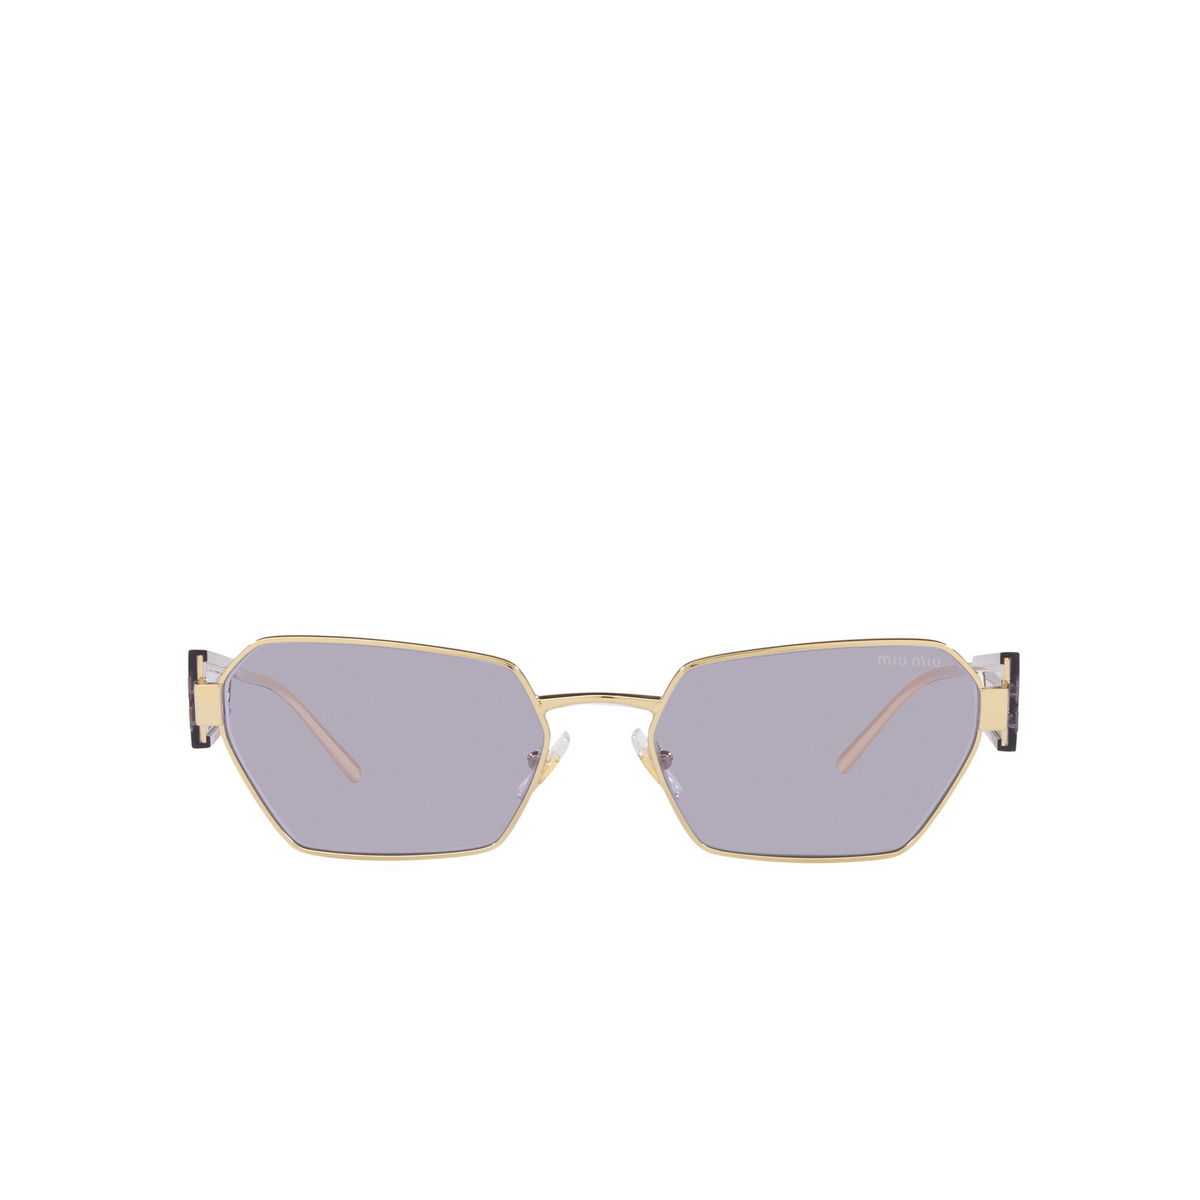 Miu Miu® Irregular Sunglasses: MU 53WS color Pale Gold ZVN05S - front view.